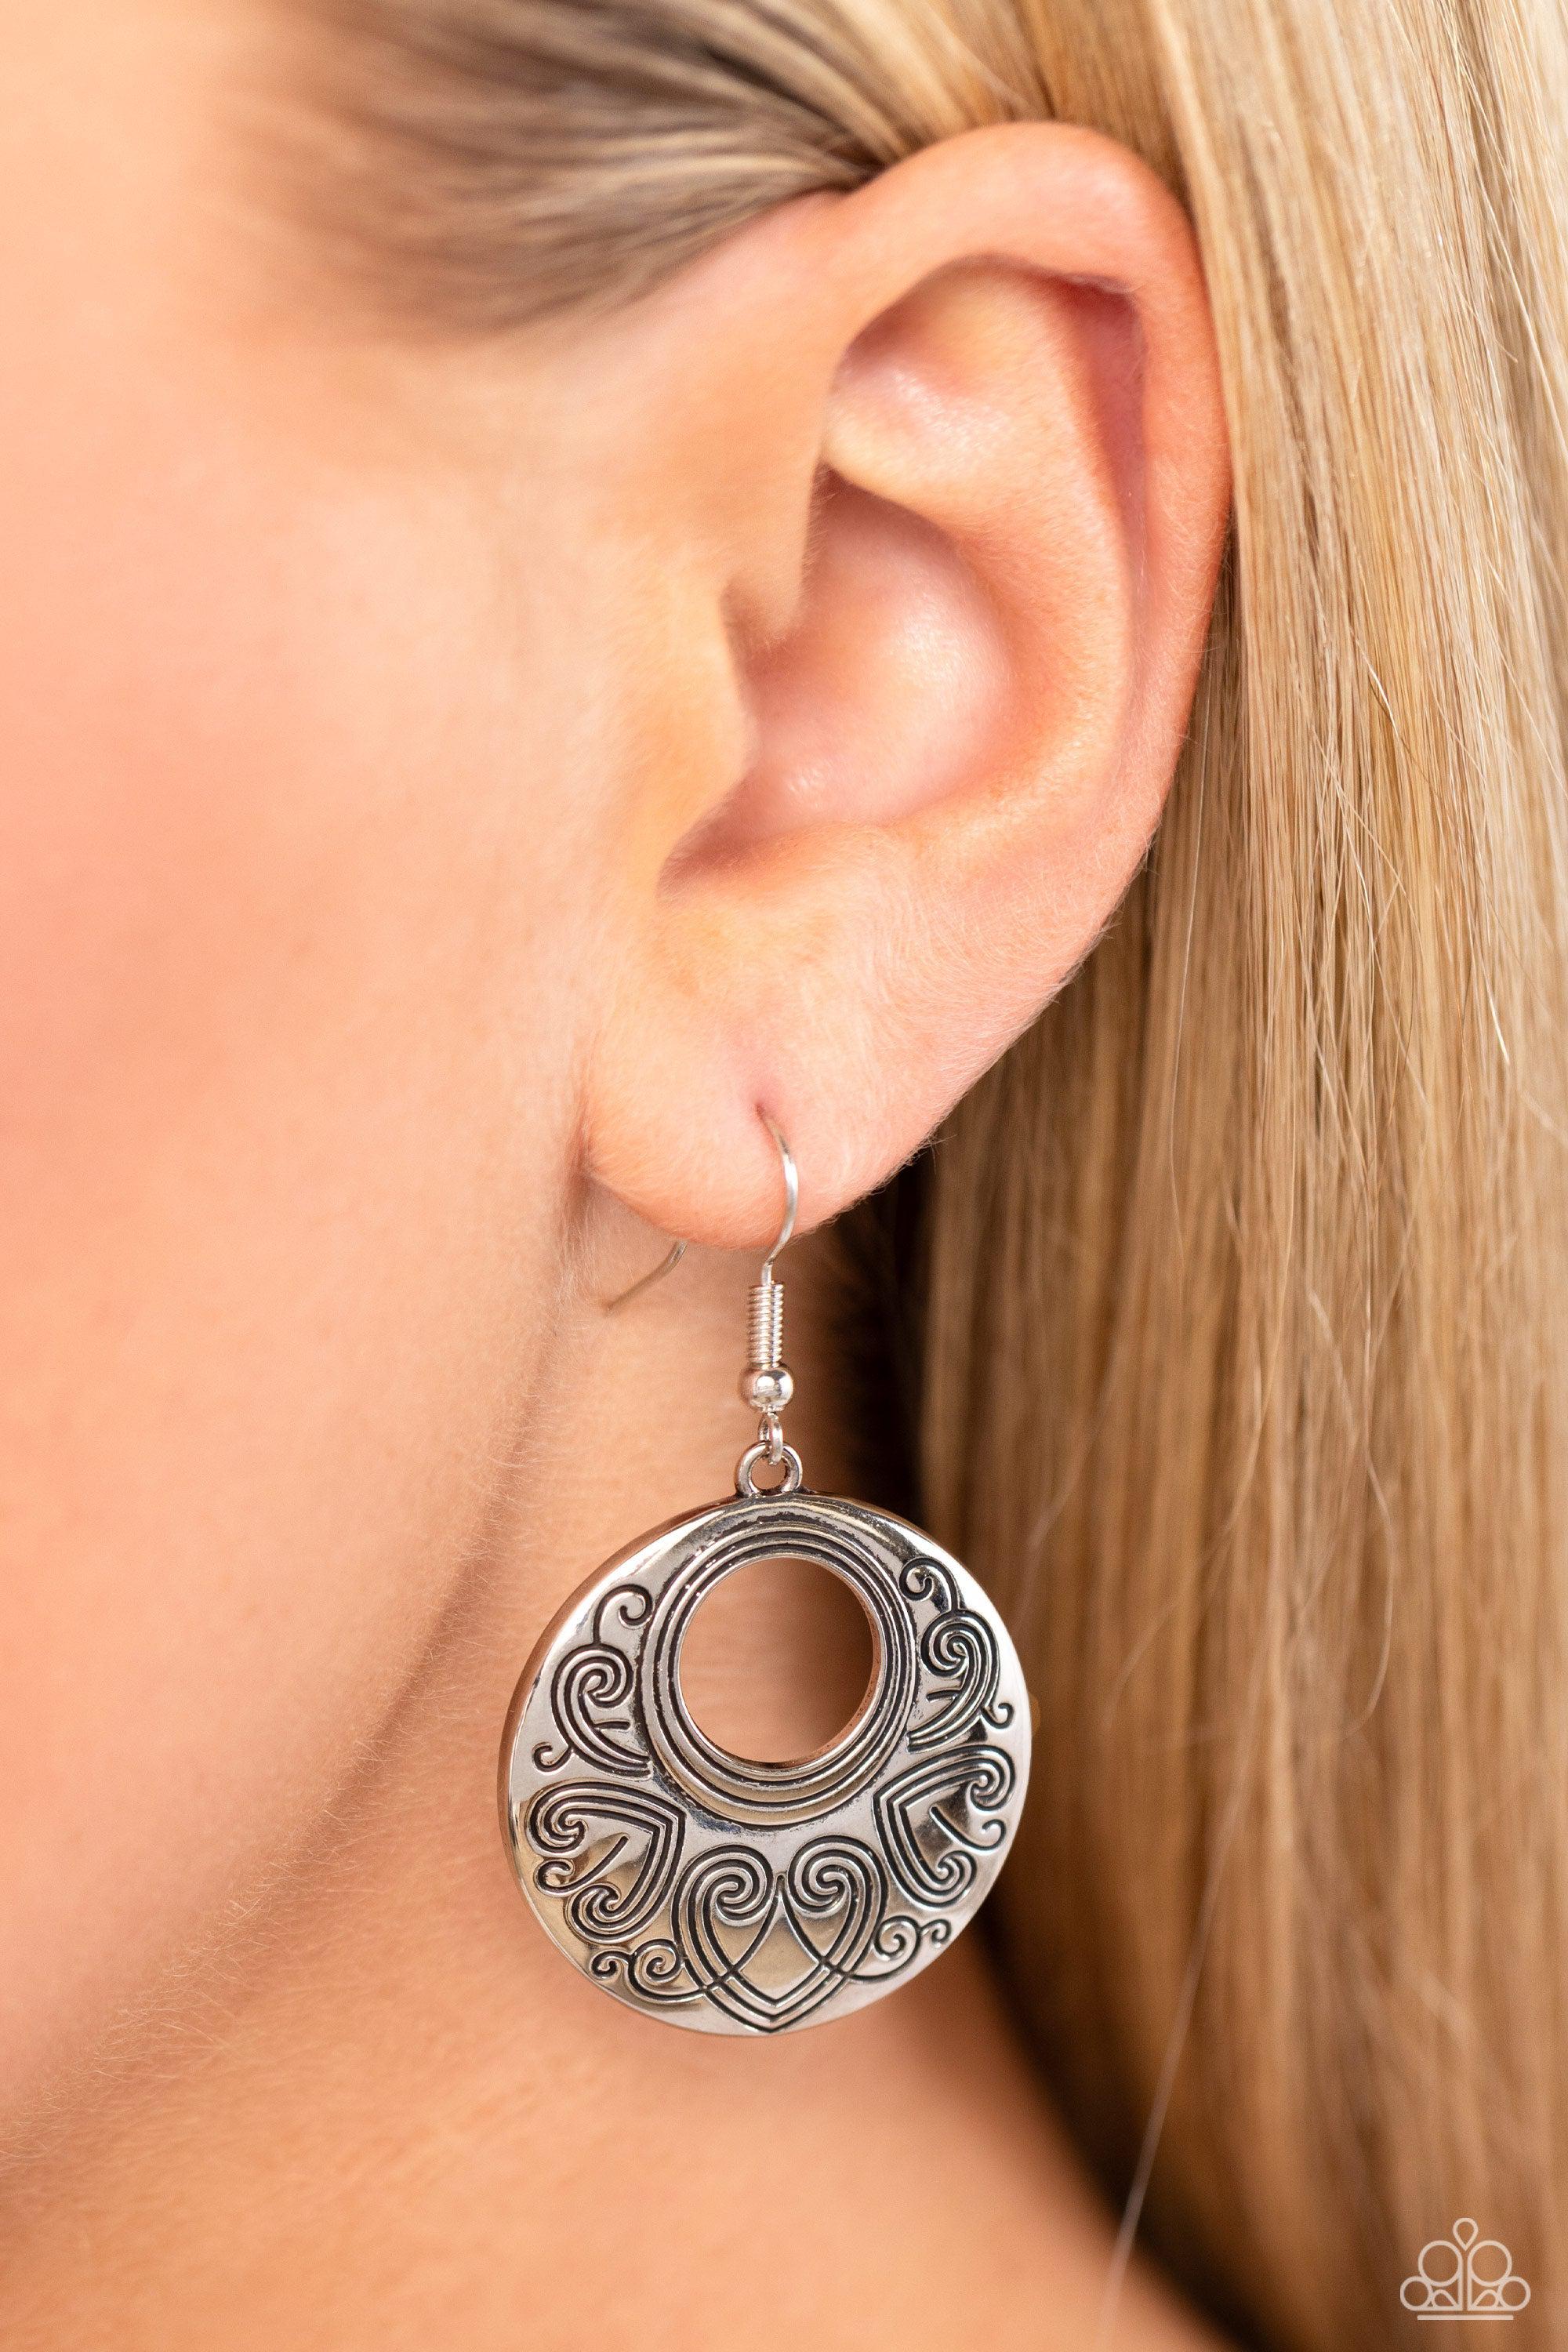 Western Beau Silver Heart Earrings - Paparazzi Accessories- lightbox - CarasShop.com - $5 Jewelry by Cara Jewels